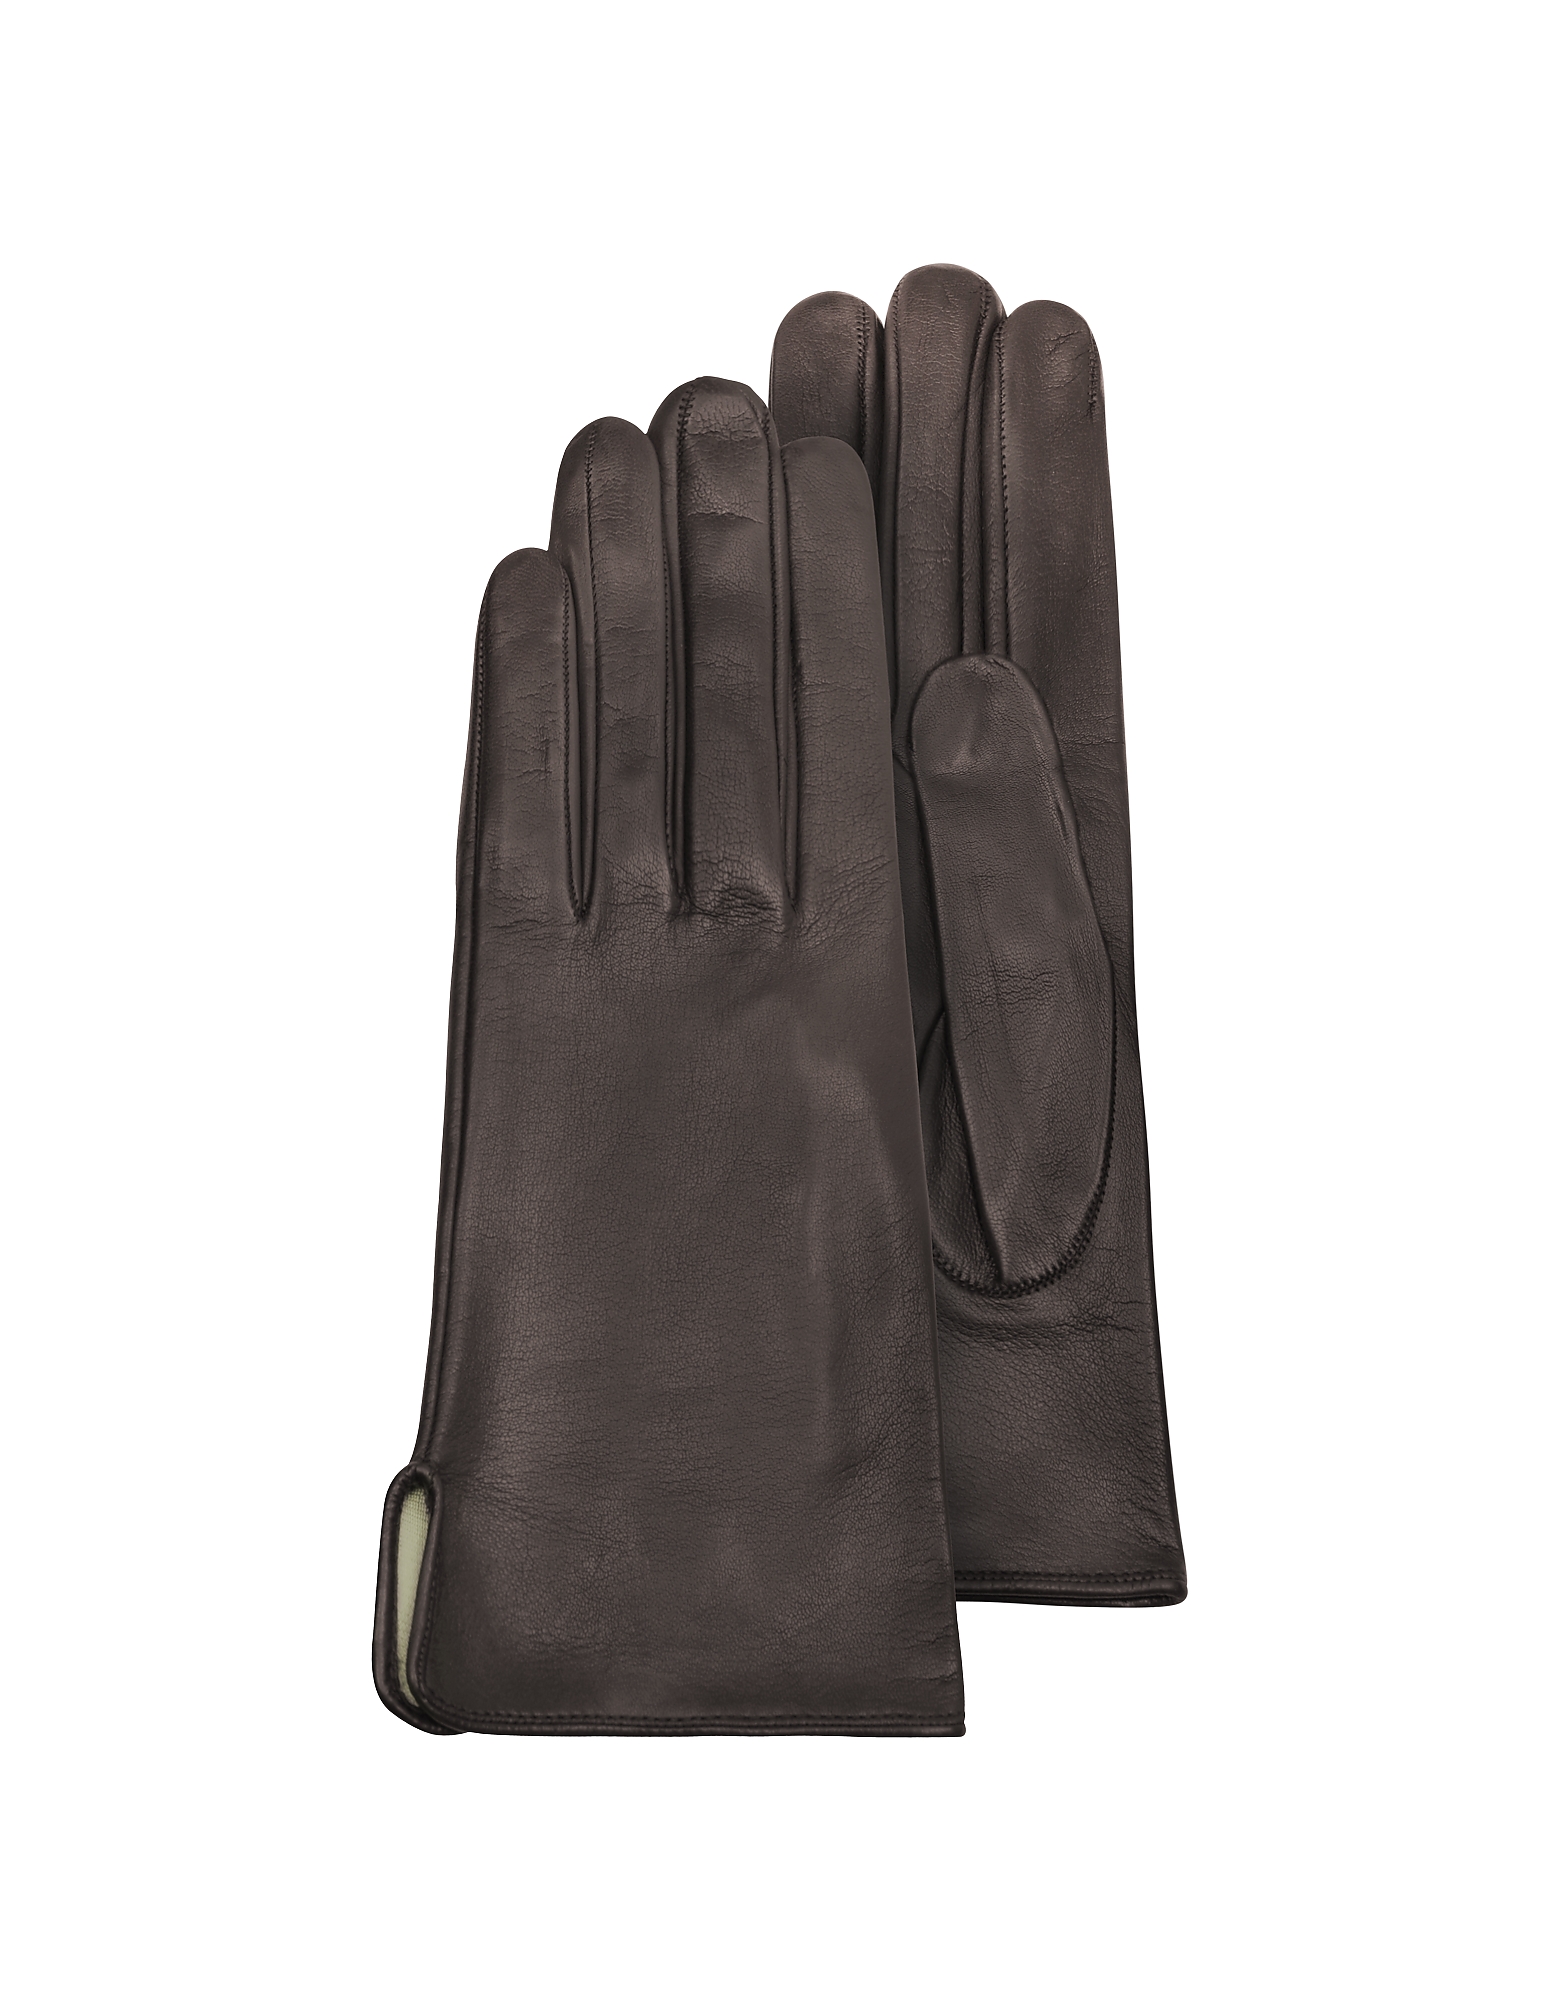 Forzieri Women's Gloves Women's Brown Calf Leather Gloves w/ Silk Lining